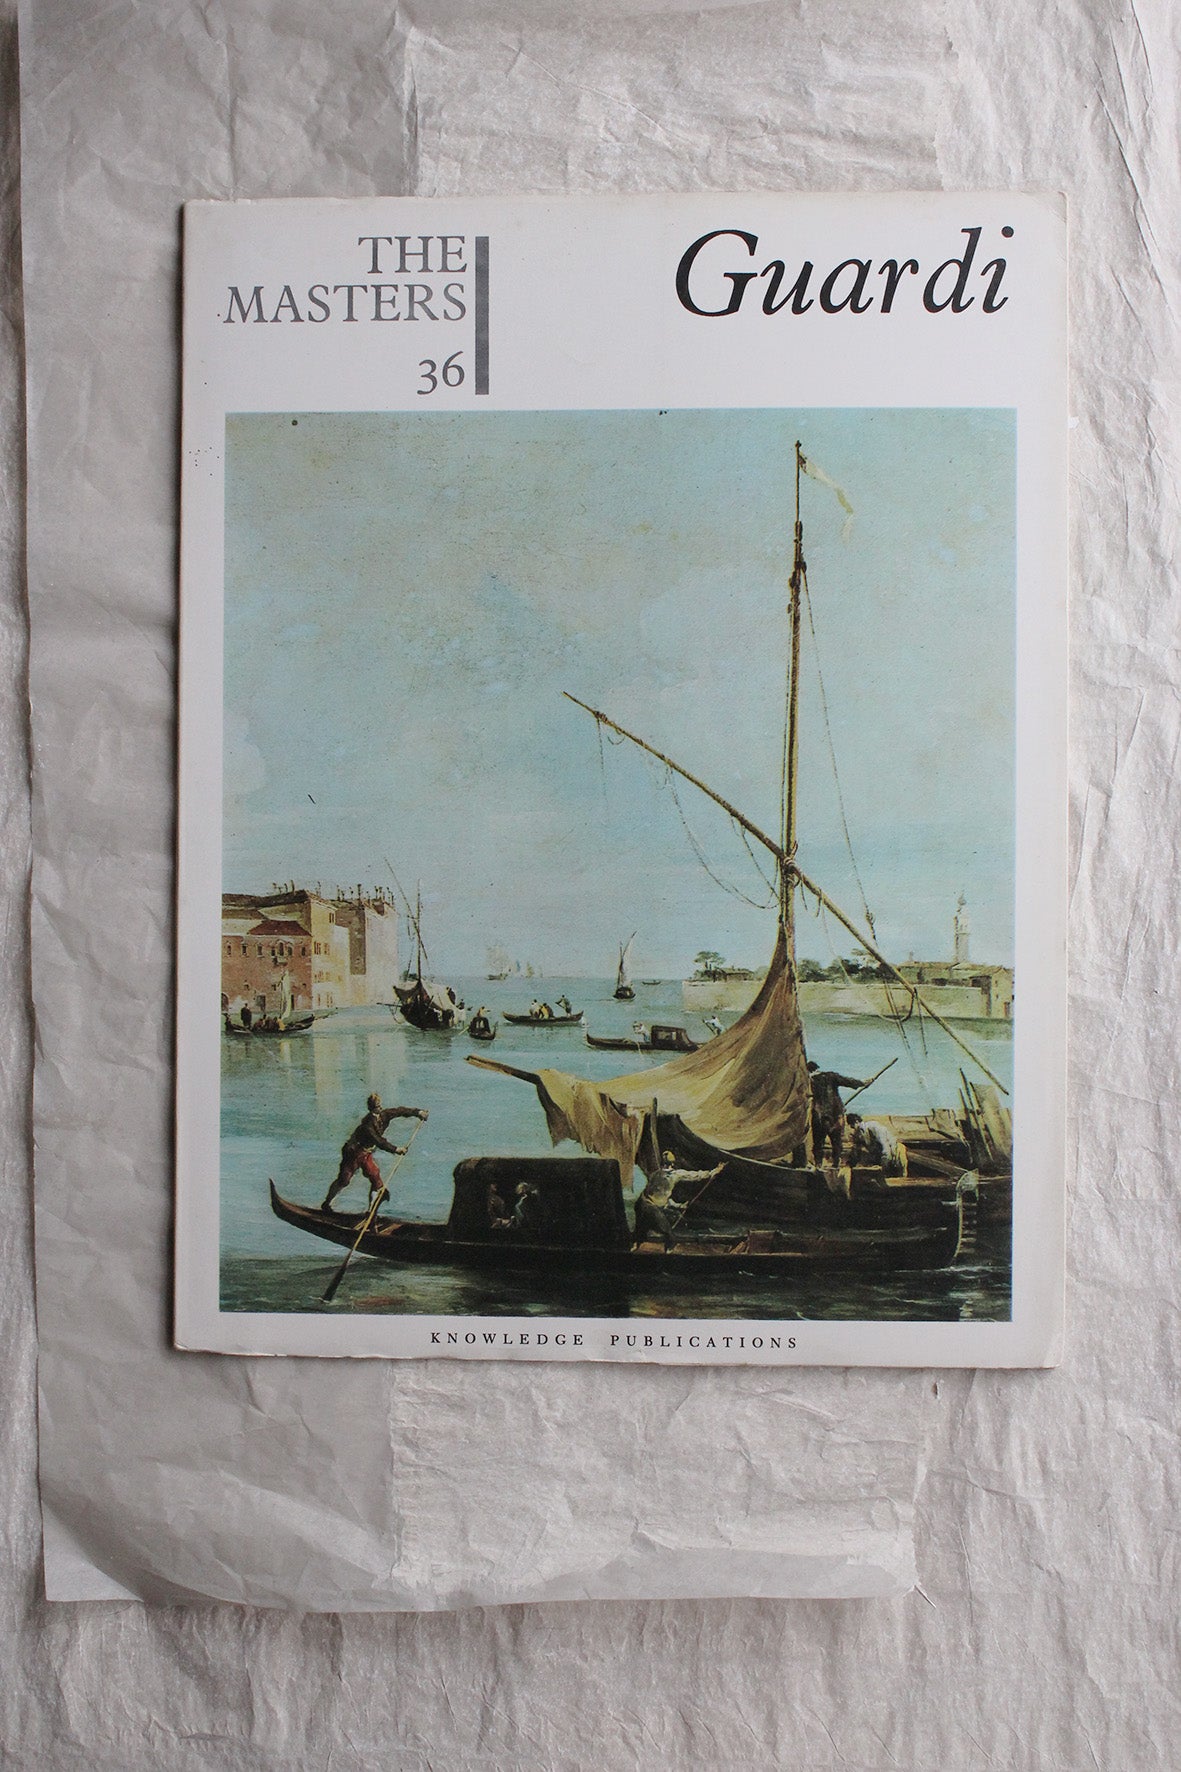 The Masters Publication - Guardi